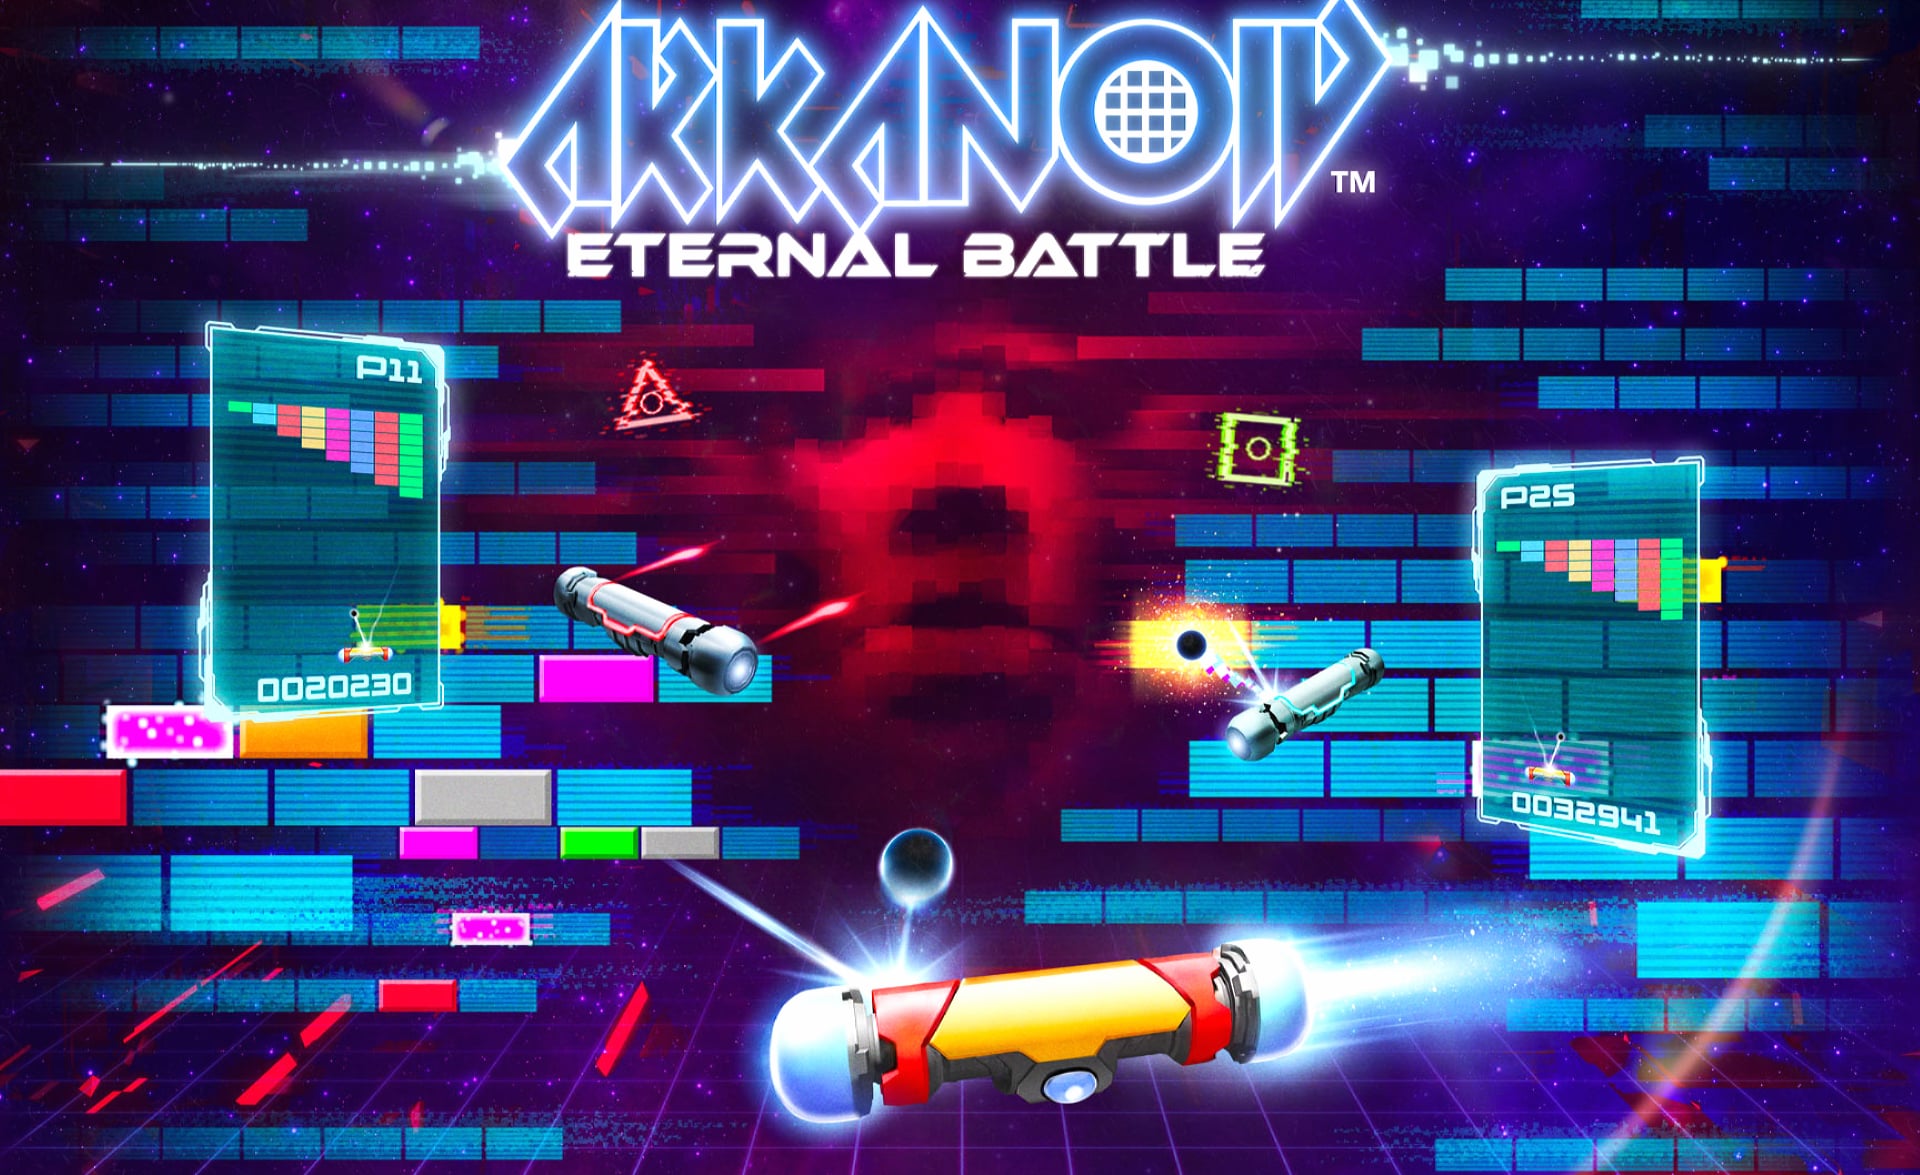 Arkanoid - Eternal Battle wallpapers HD quality